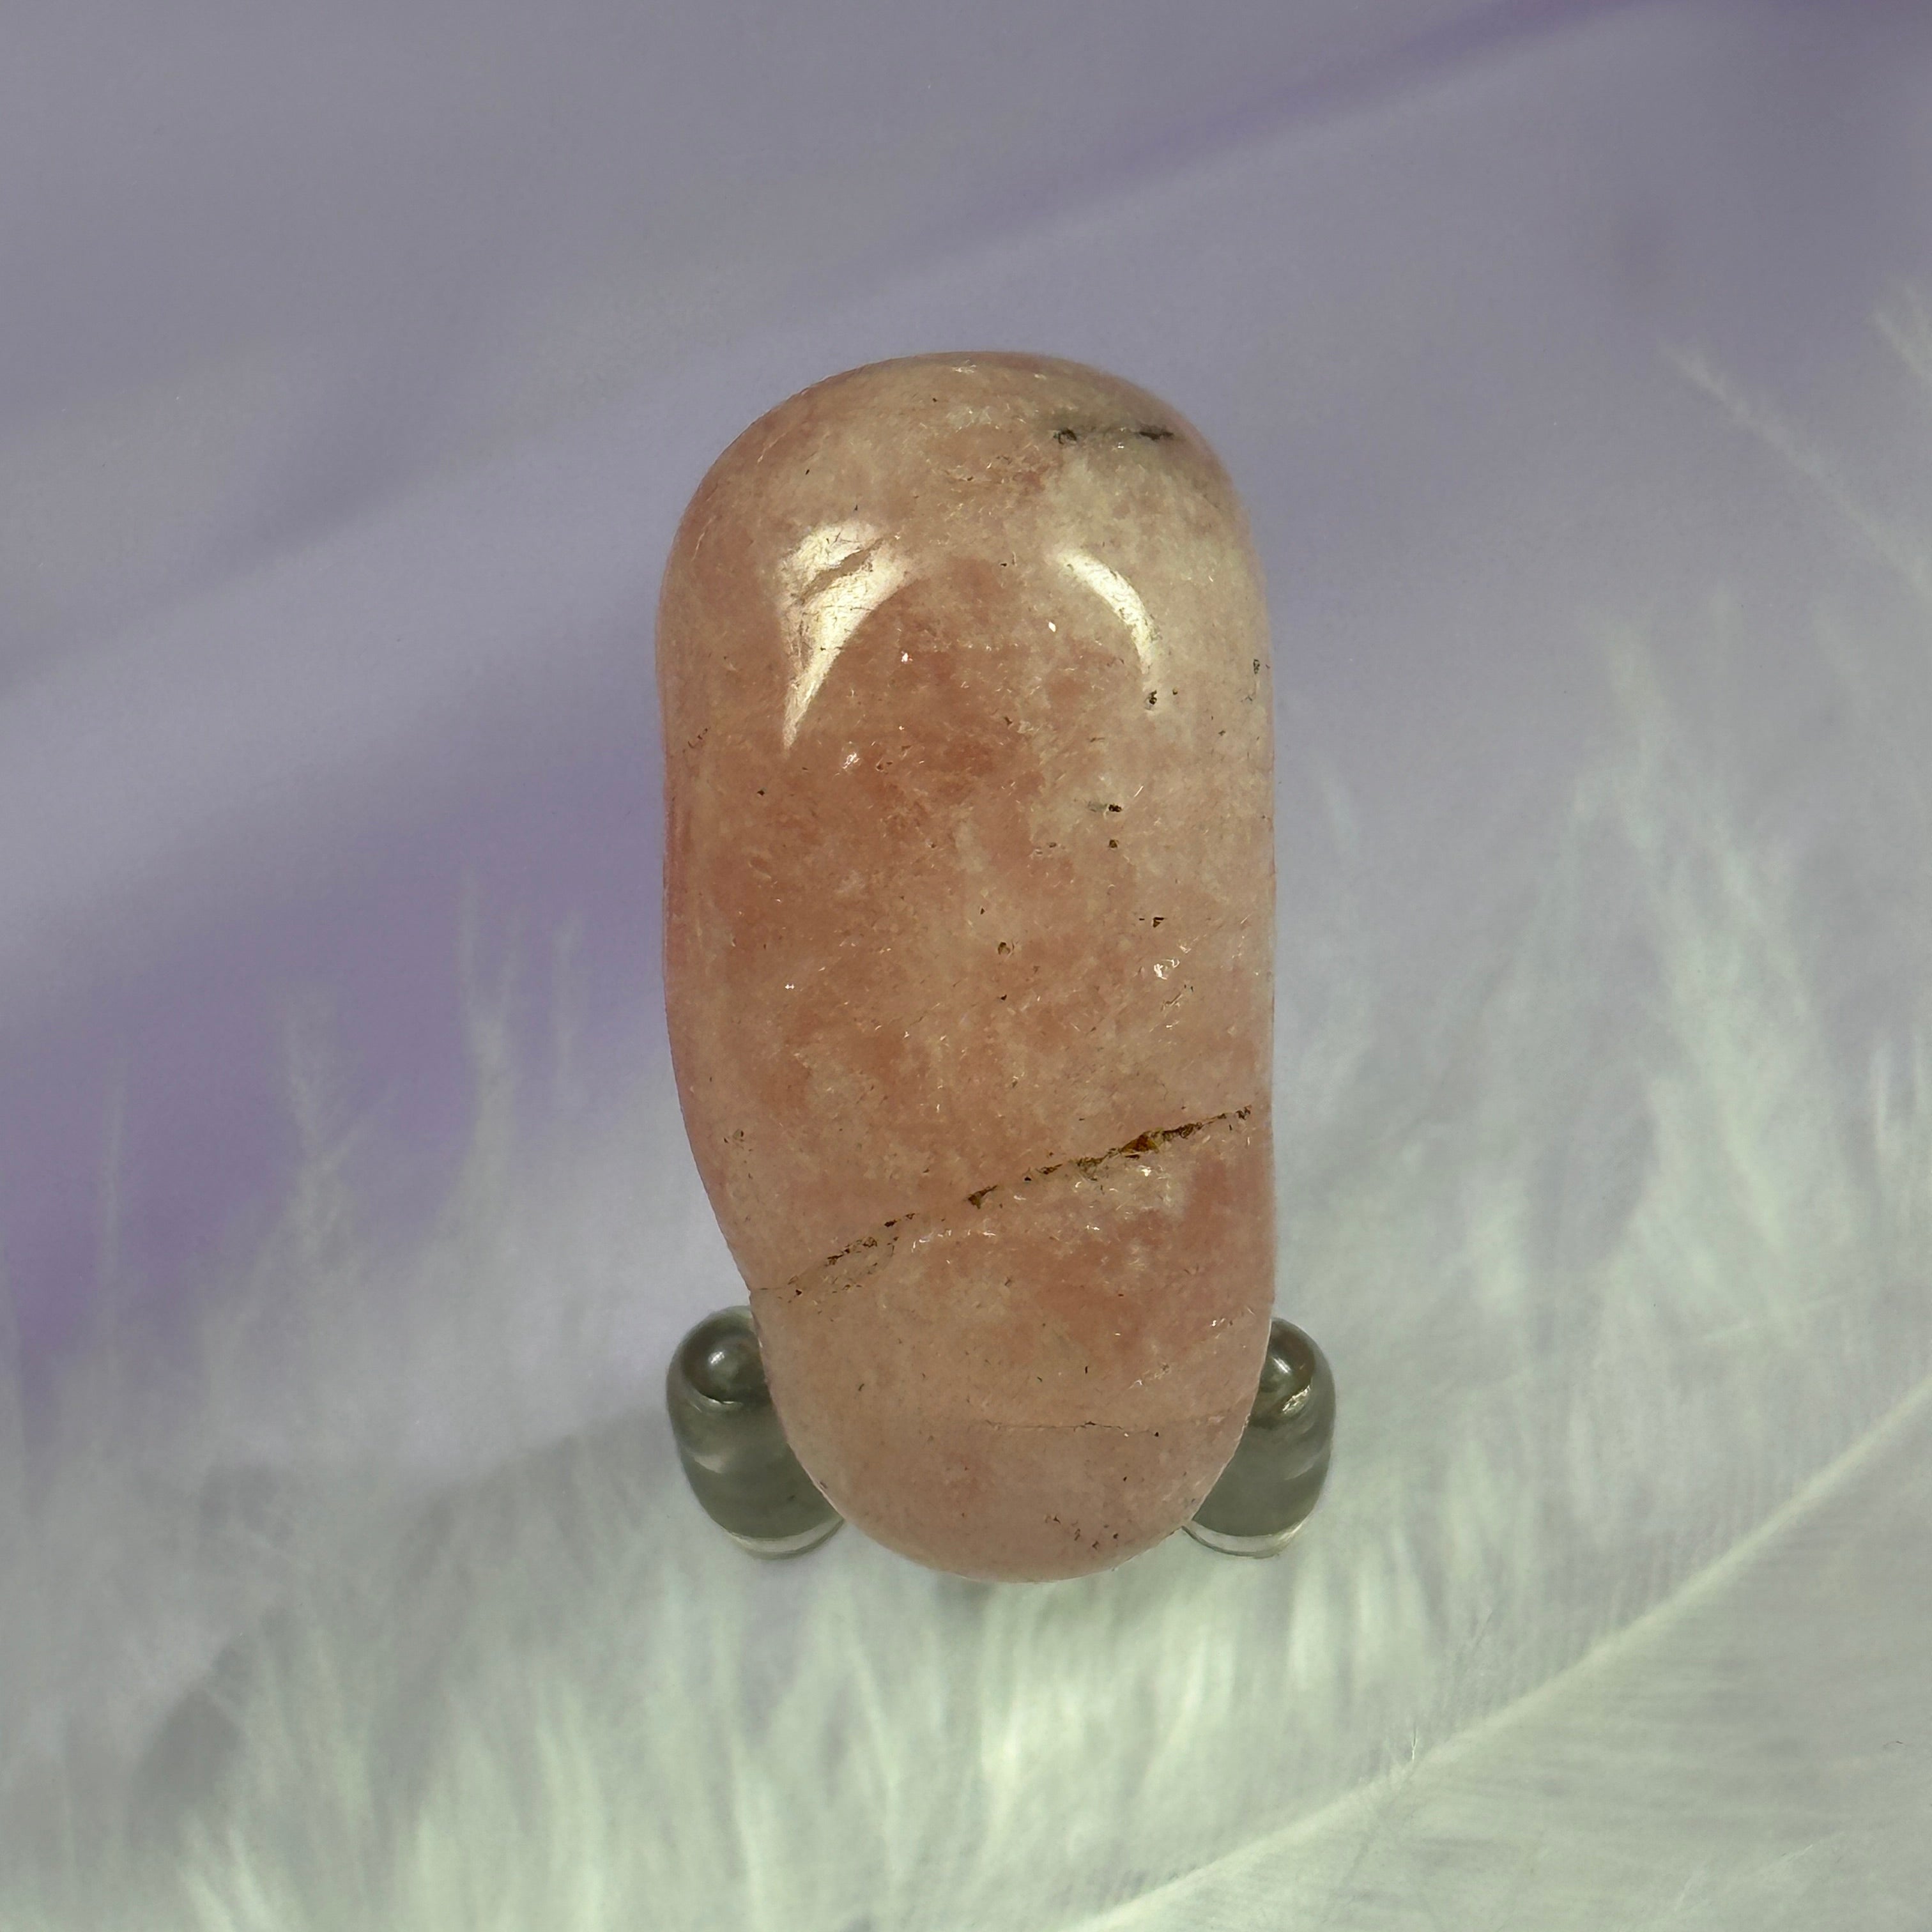 Beautiful Pink Beryl tumble stone, Morganite 16.1g SN56182